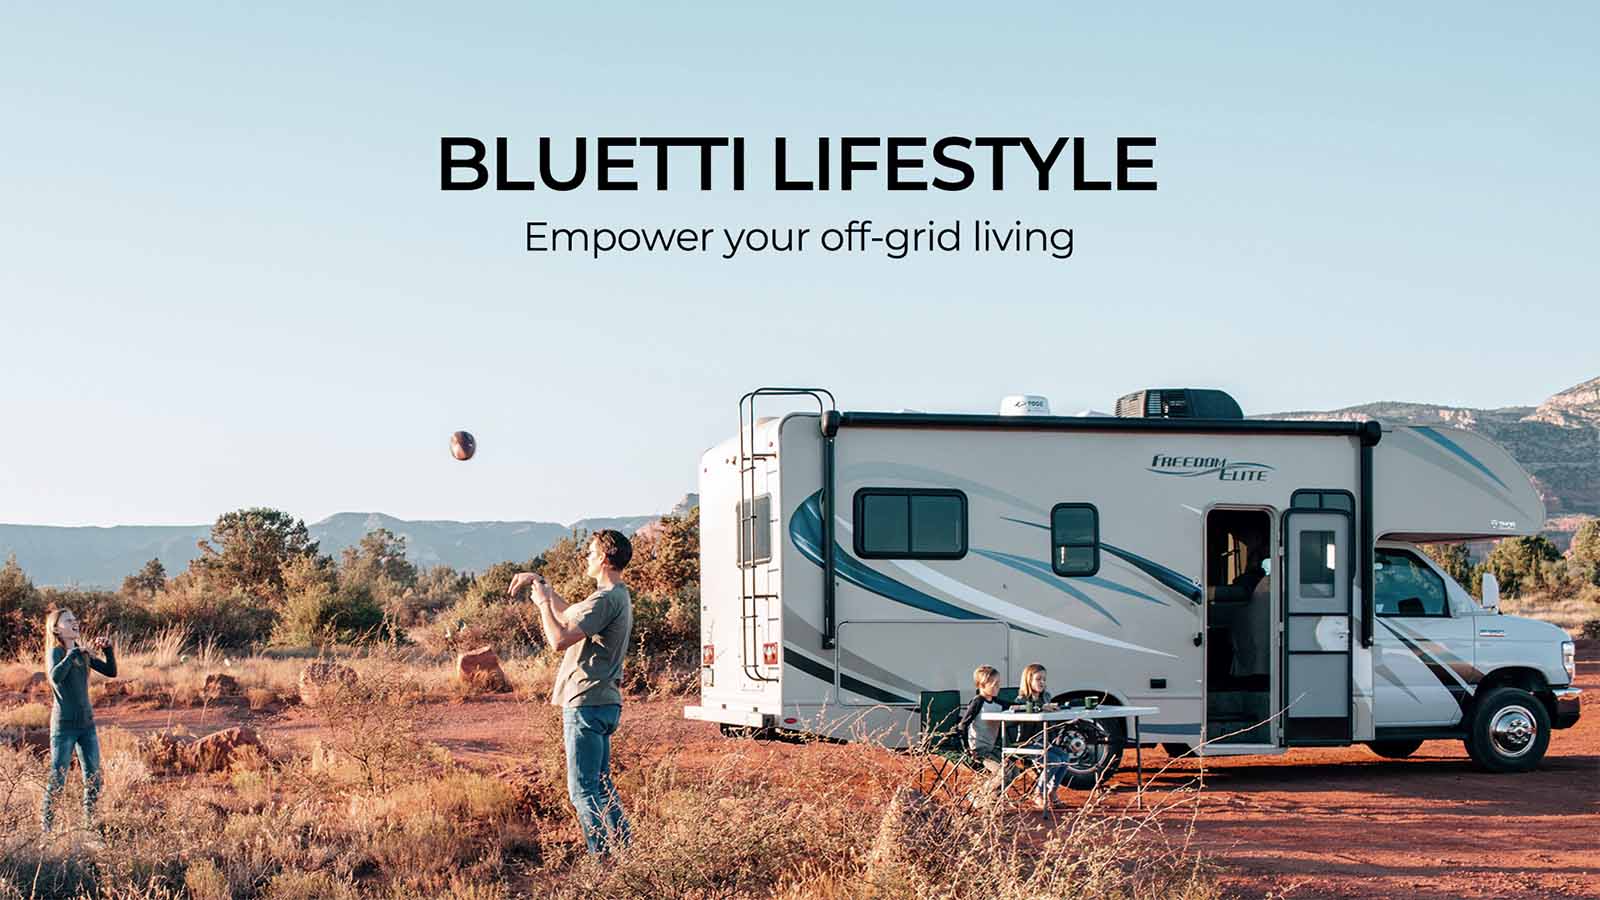 Bluetti image of a camper outdoors